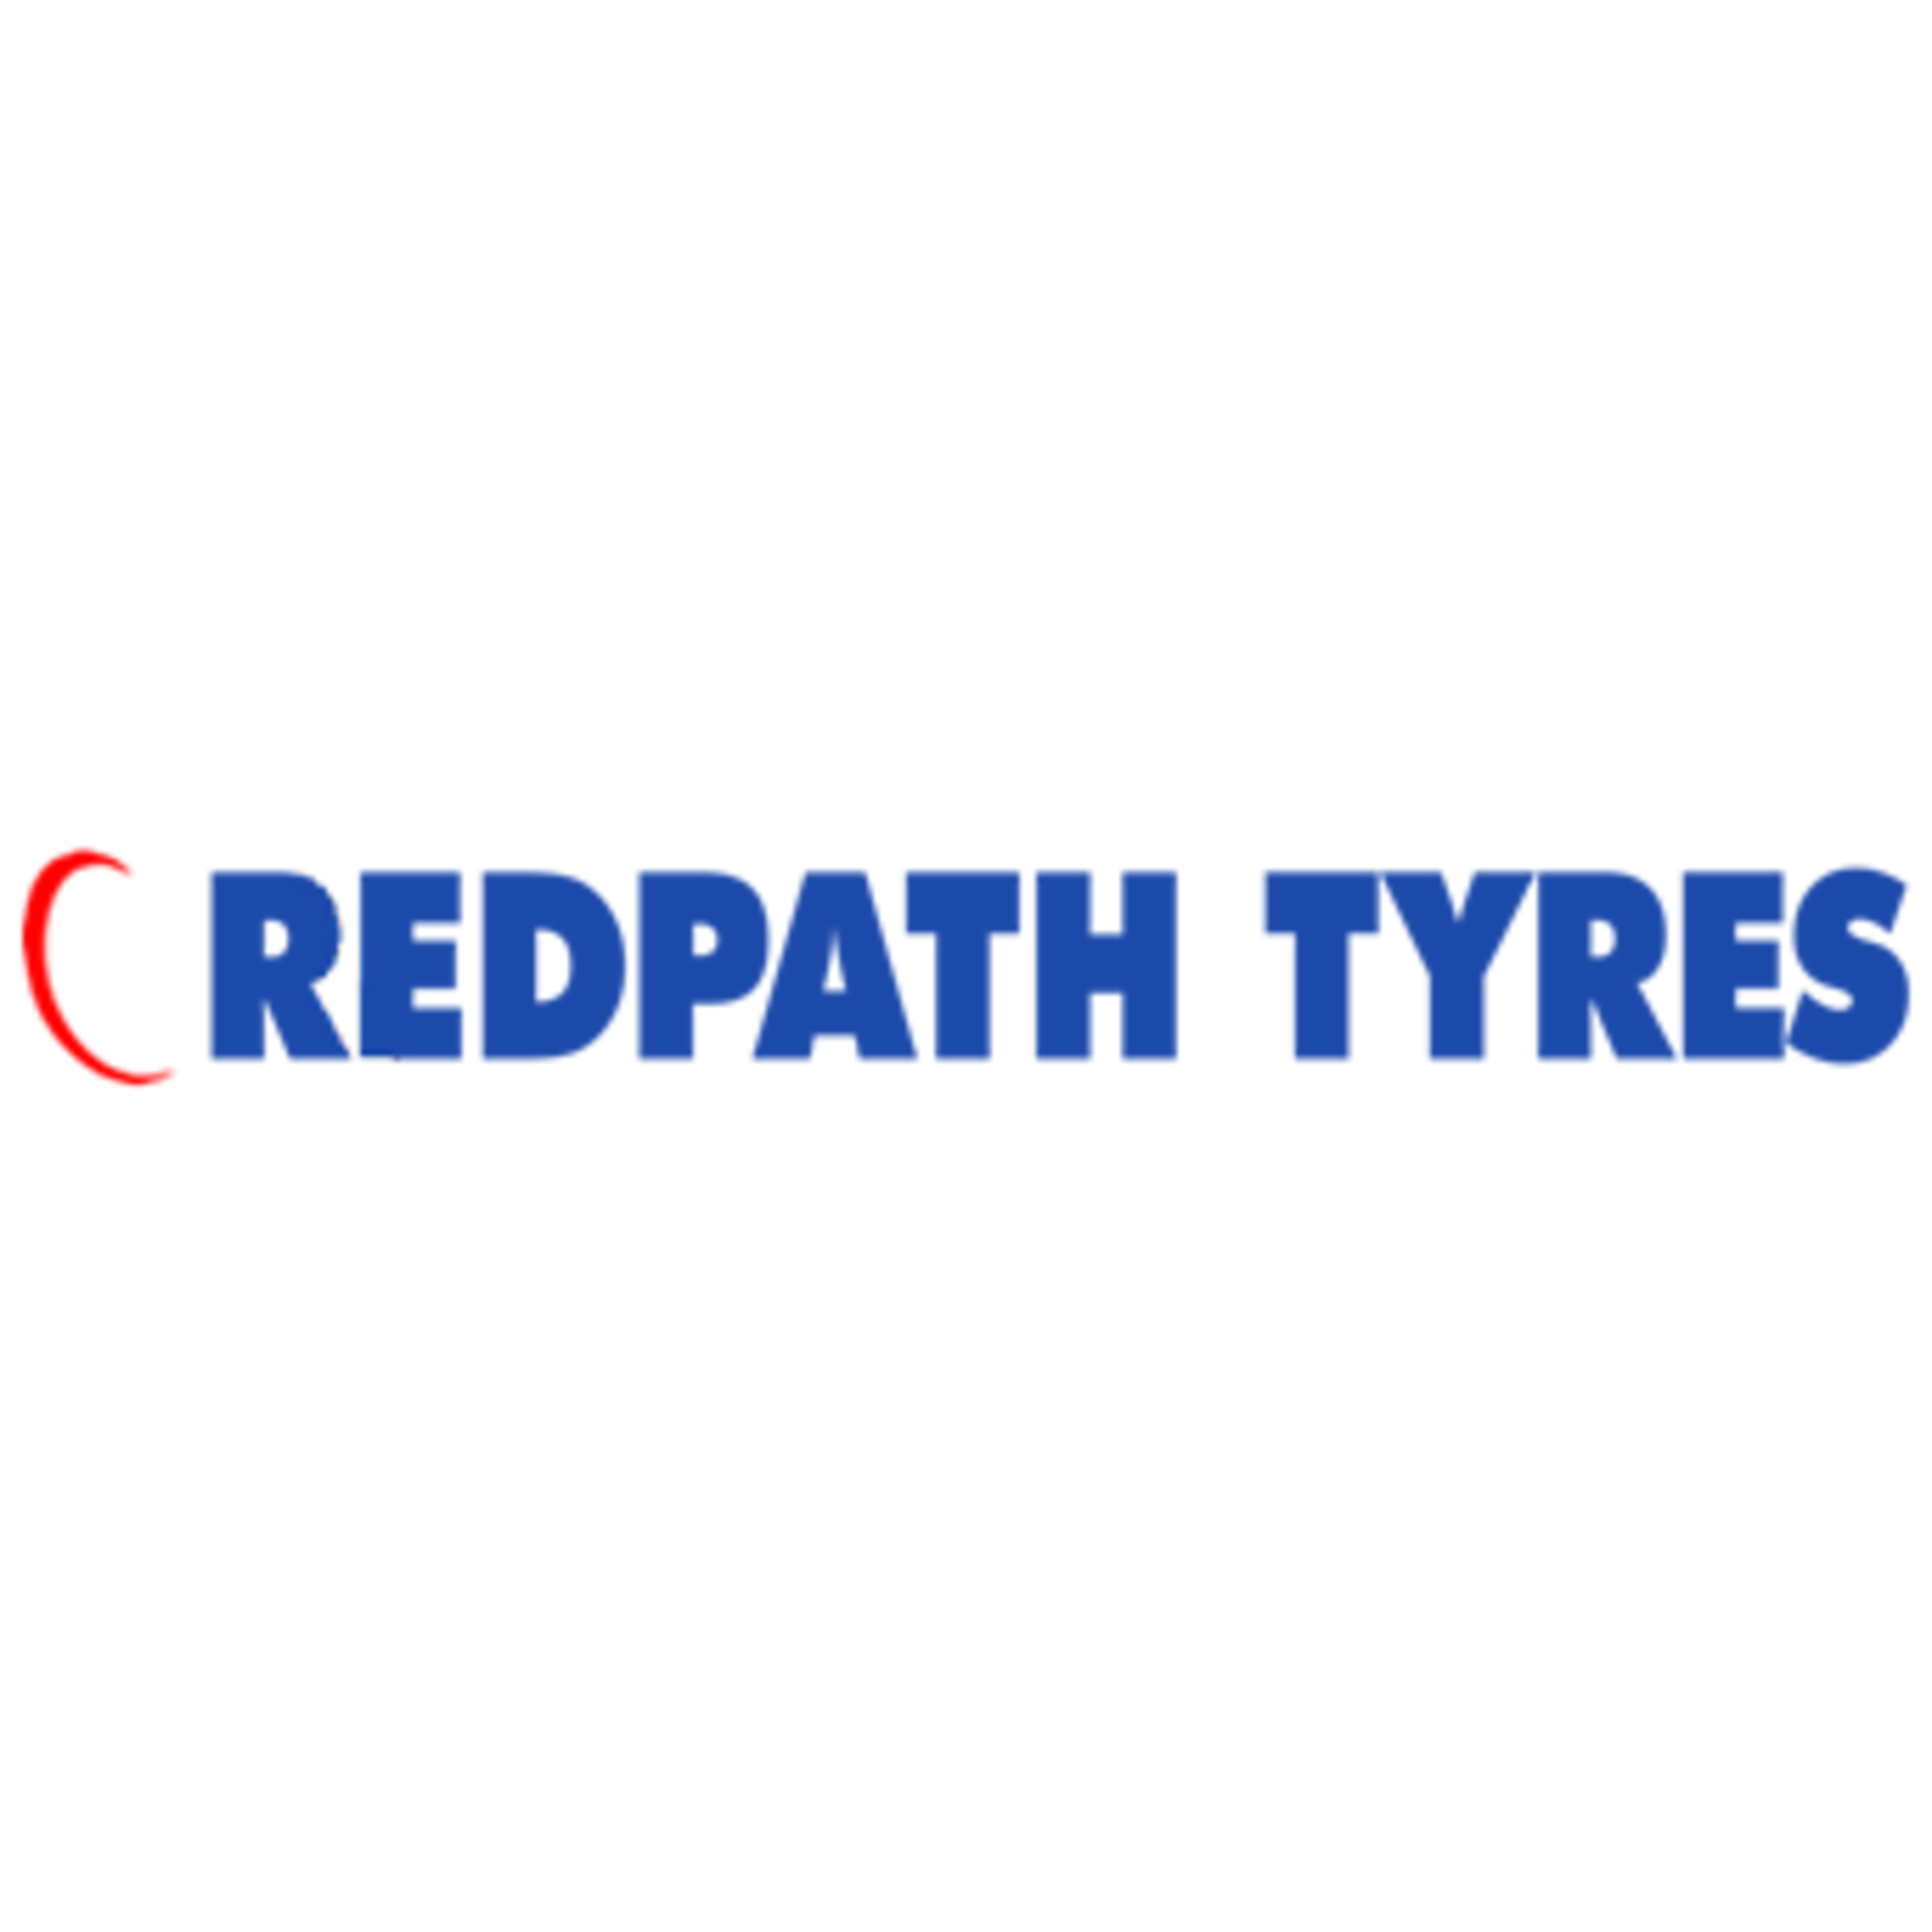 REDPATH TYRES LIMITED - HADDINGTON | Logo REDPATH TYRES LIMITED - HADDINGTON Haddington 01620 825566